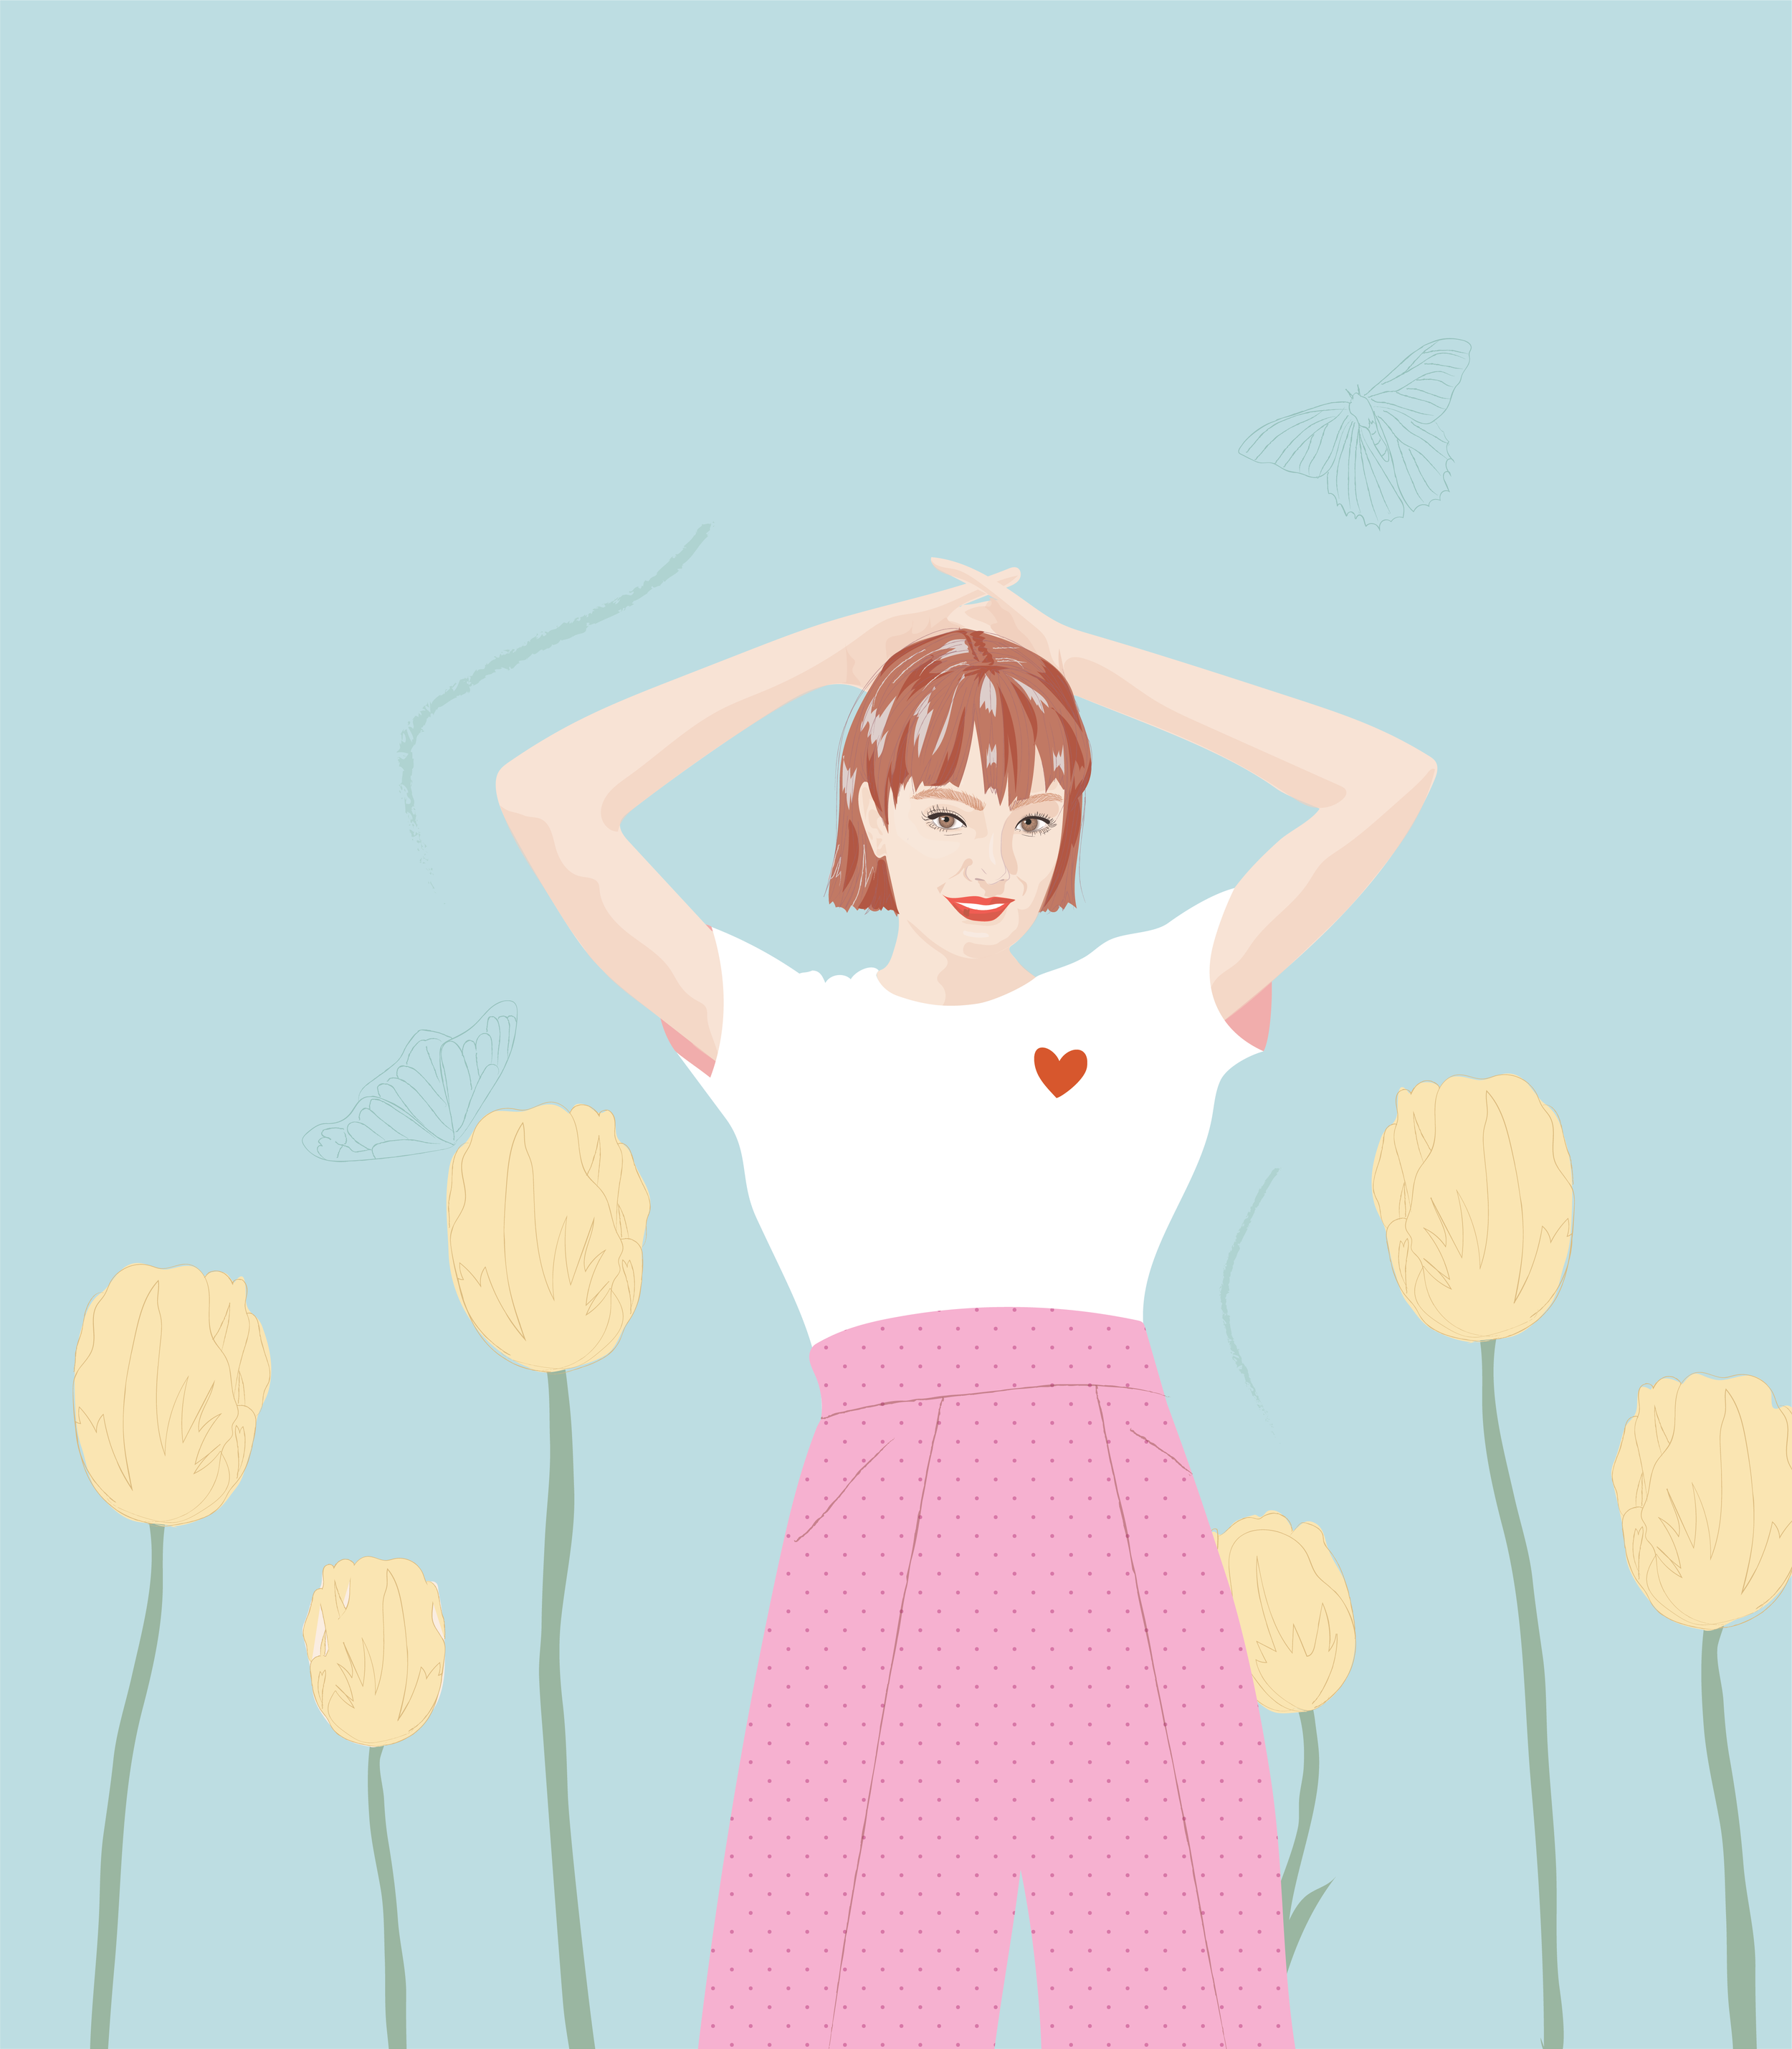 girl_tulips-01.png